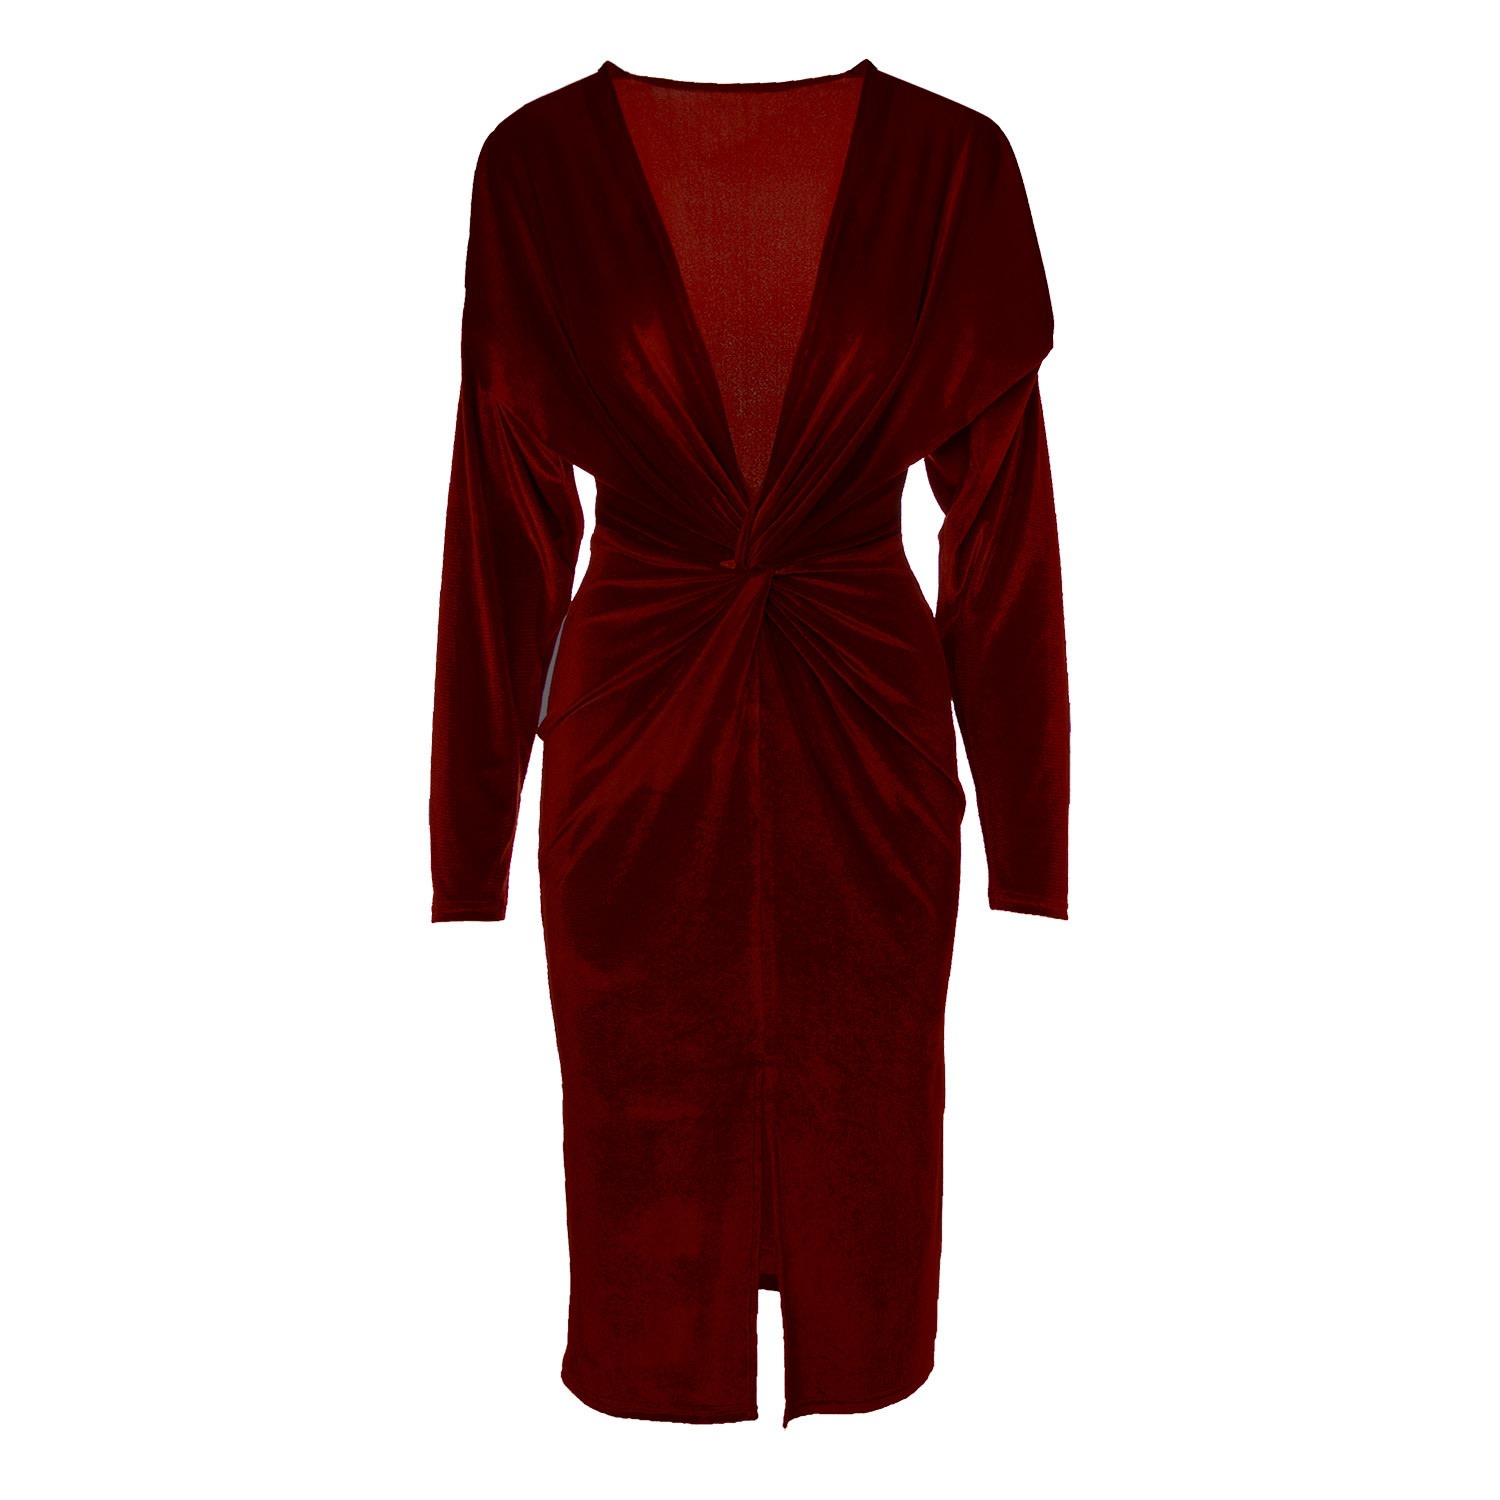 Women’s Red Burgundy Velvet Dress With Knot Extra Small Bluzat